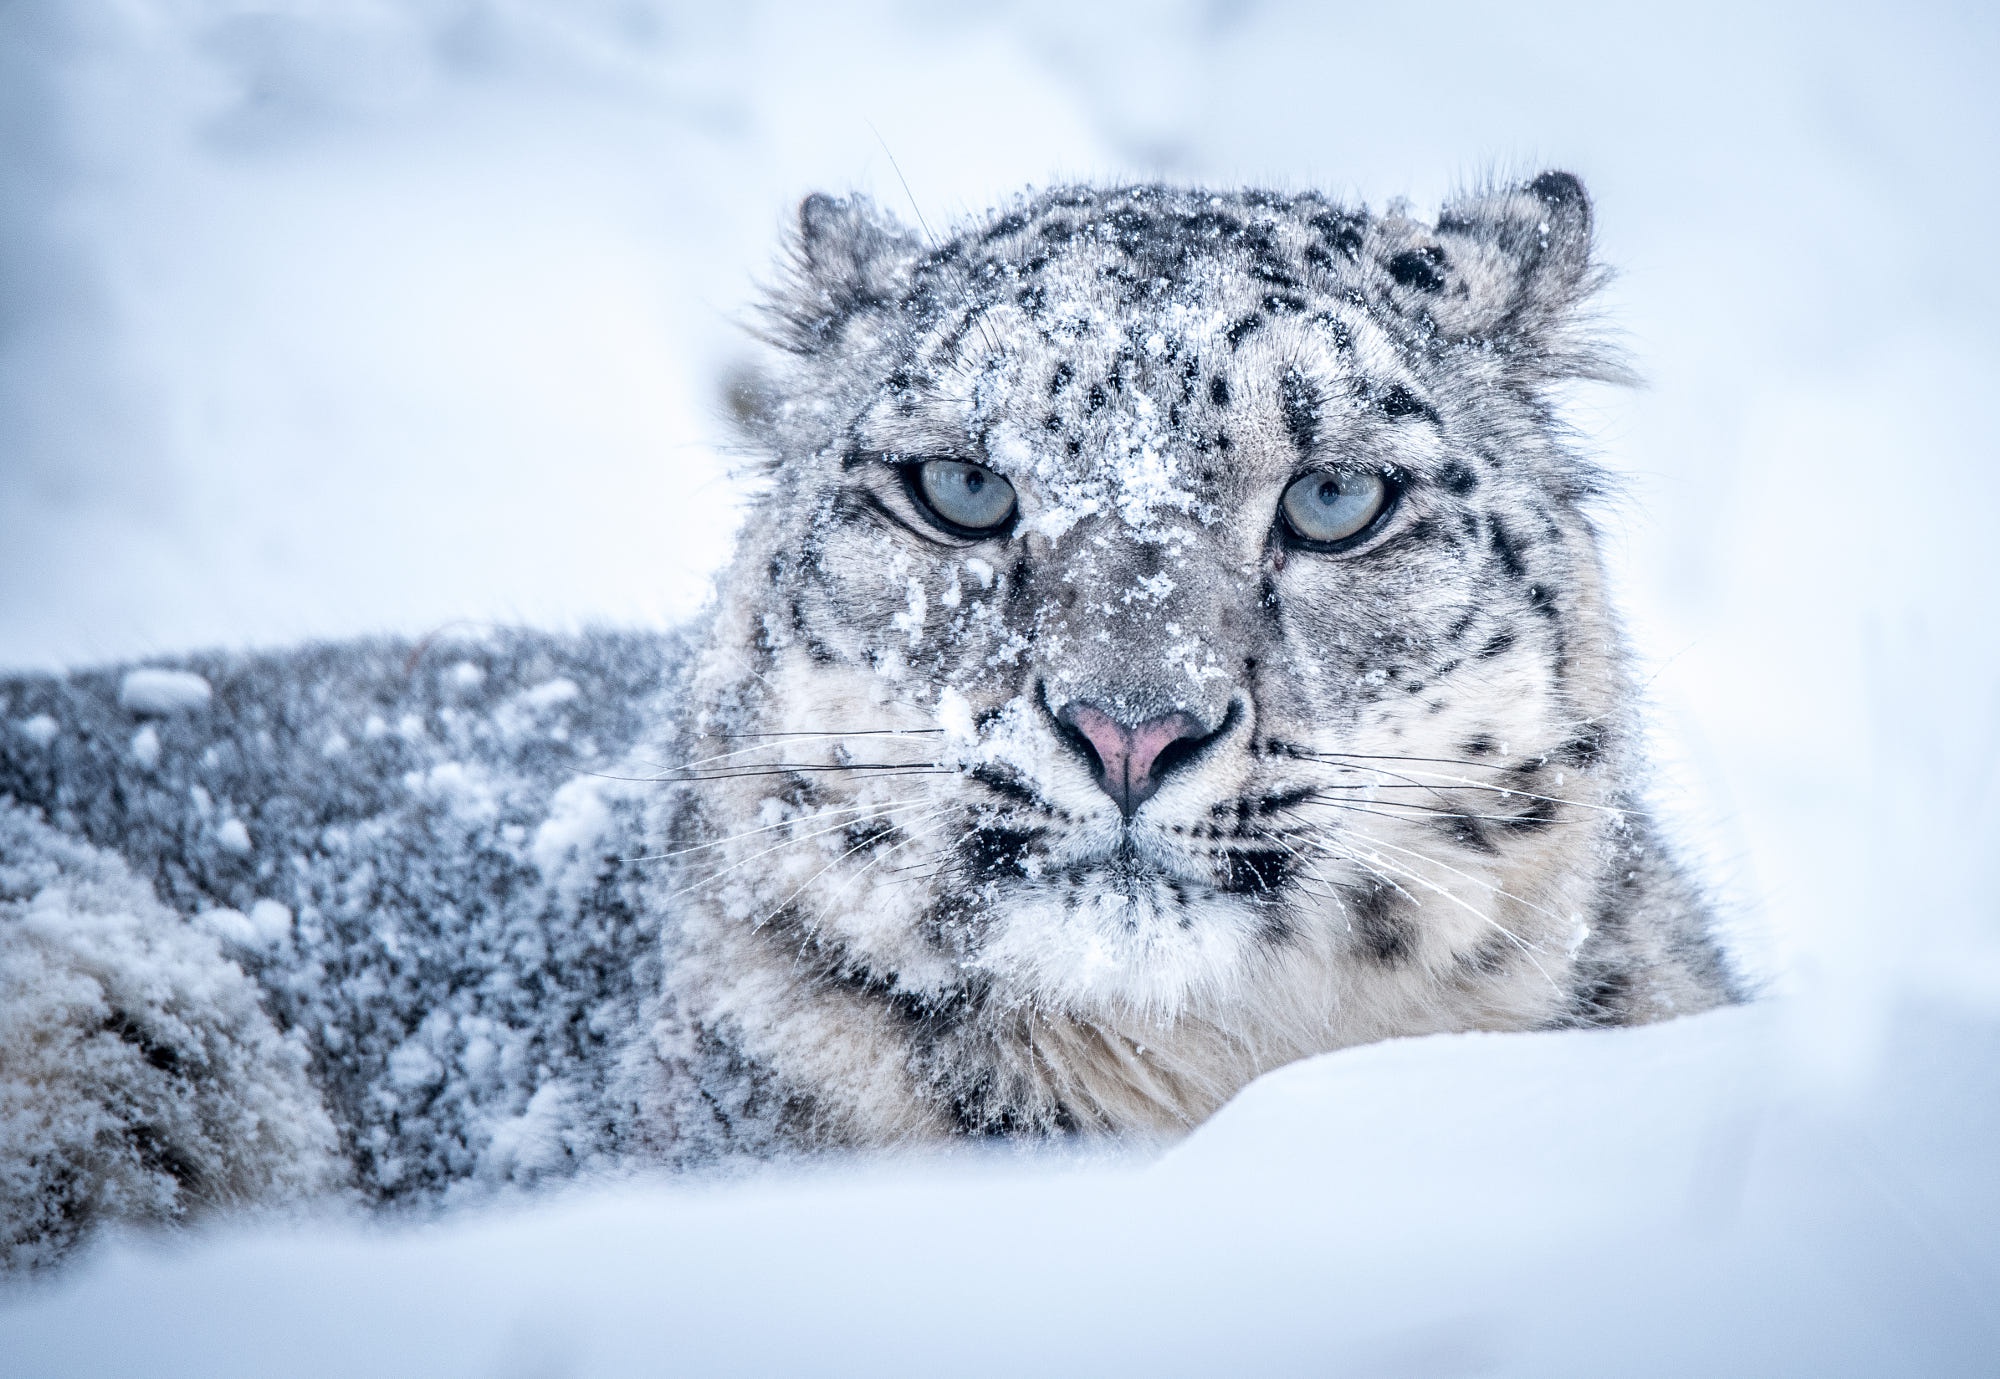 Snow Leopard Wallpaper 1920x1080